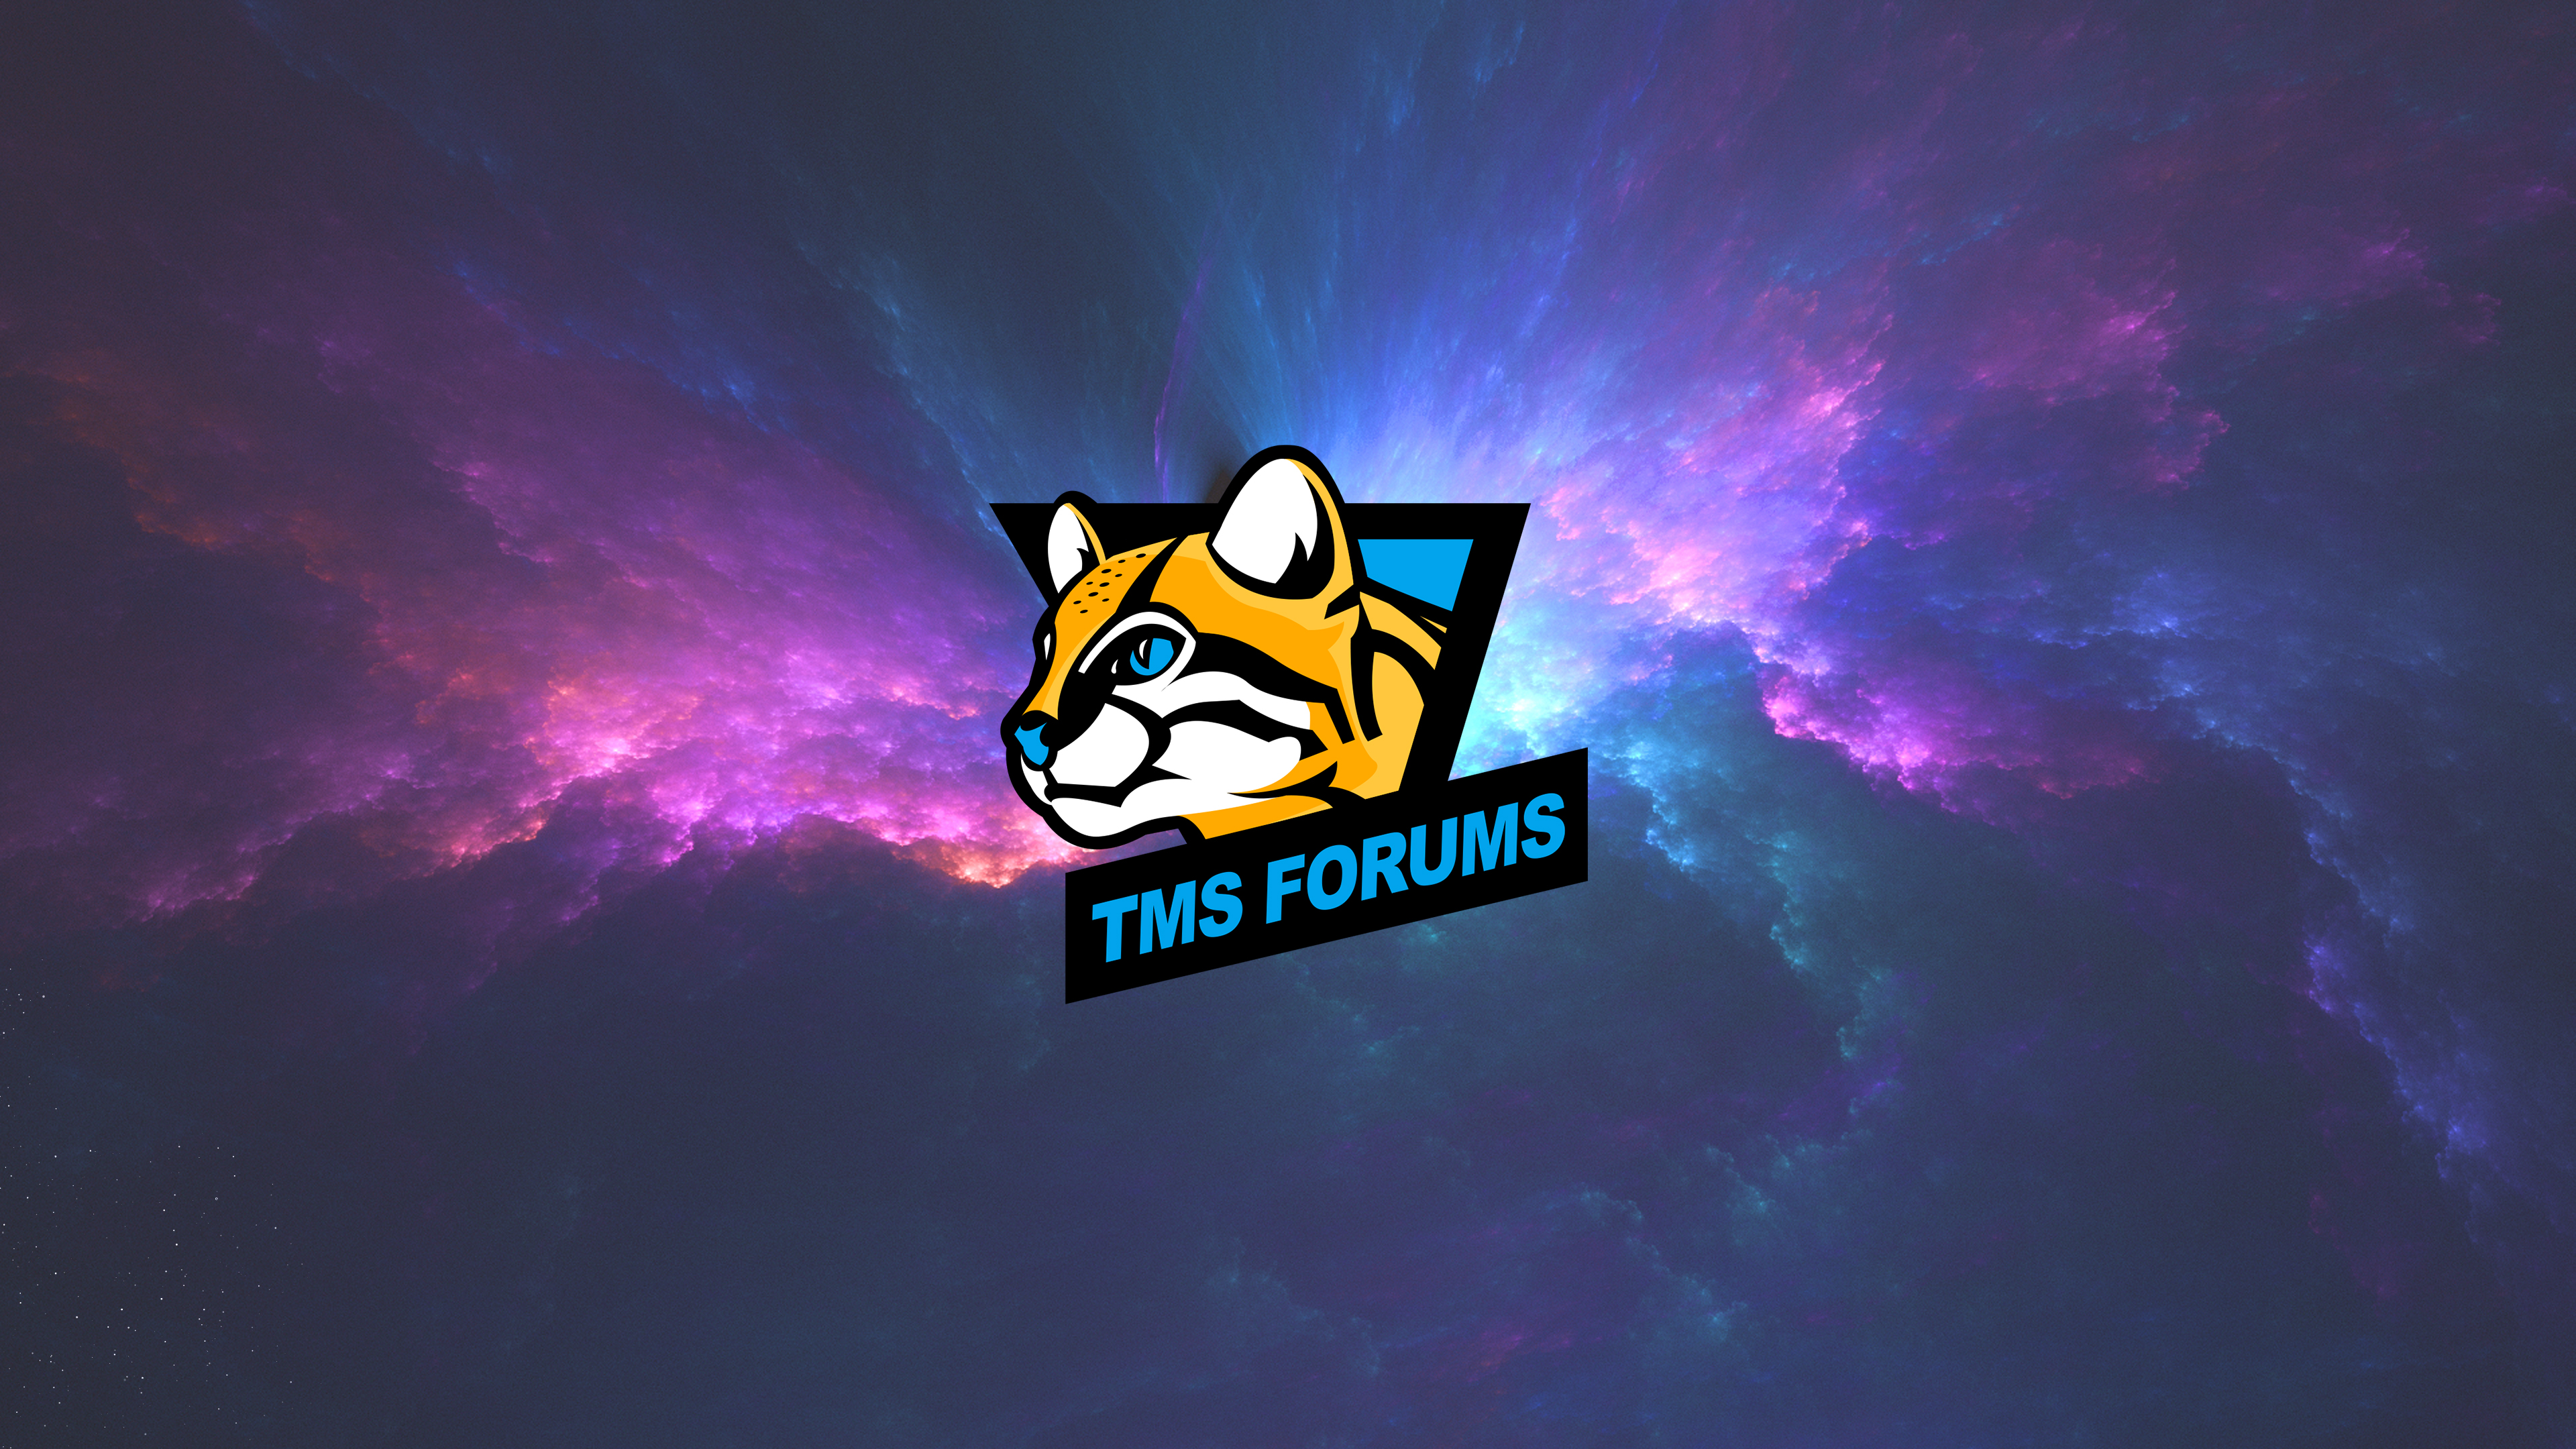 TMS Forums Logo Wallpaper Space No Blur.jpg